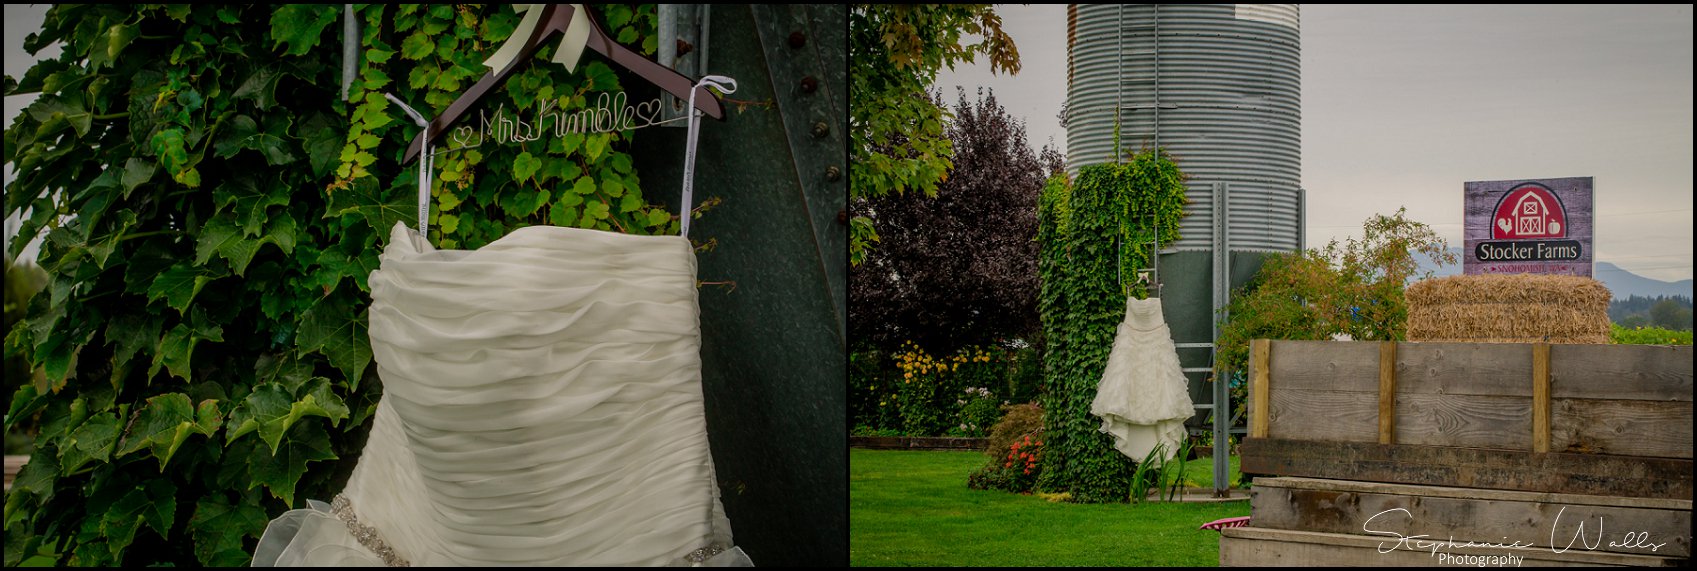 Kimble Wedding 019 Marlena & Allans | Snohomish Red Barn Events (Stocker Farms) | Snohomish, Wa Wedding Photographer